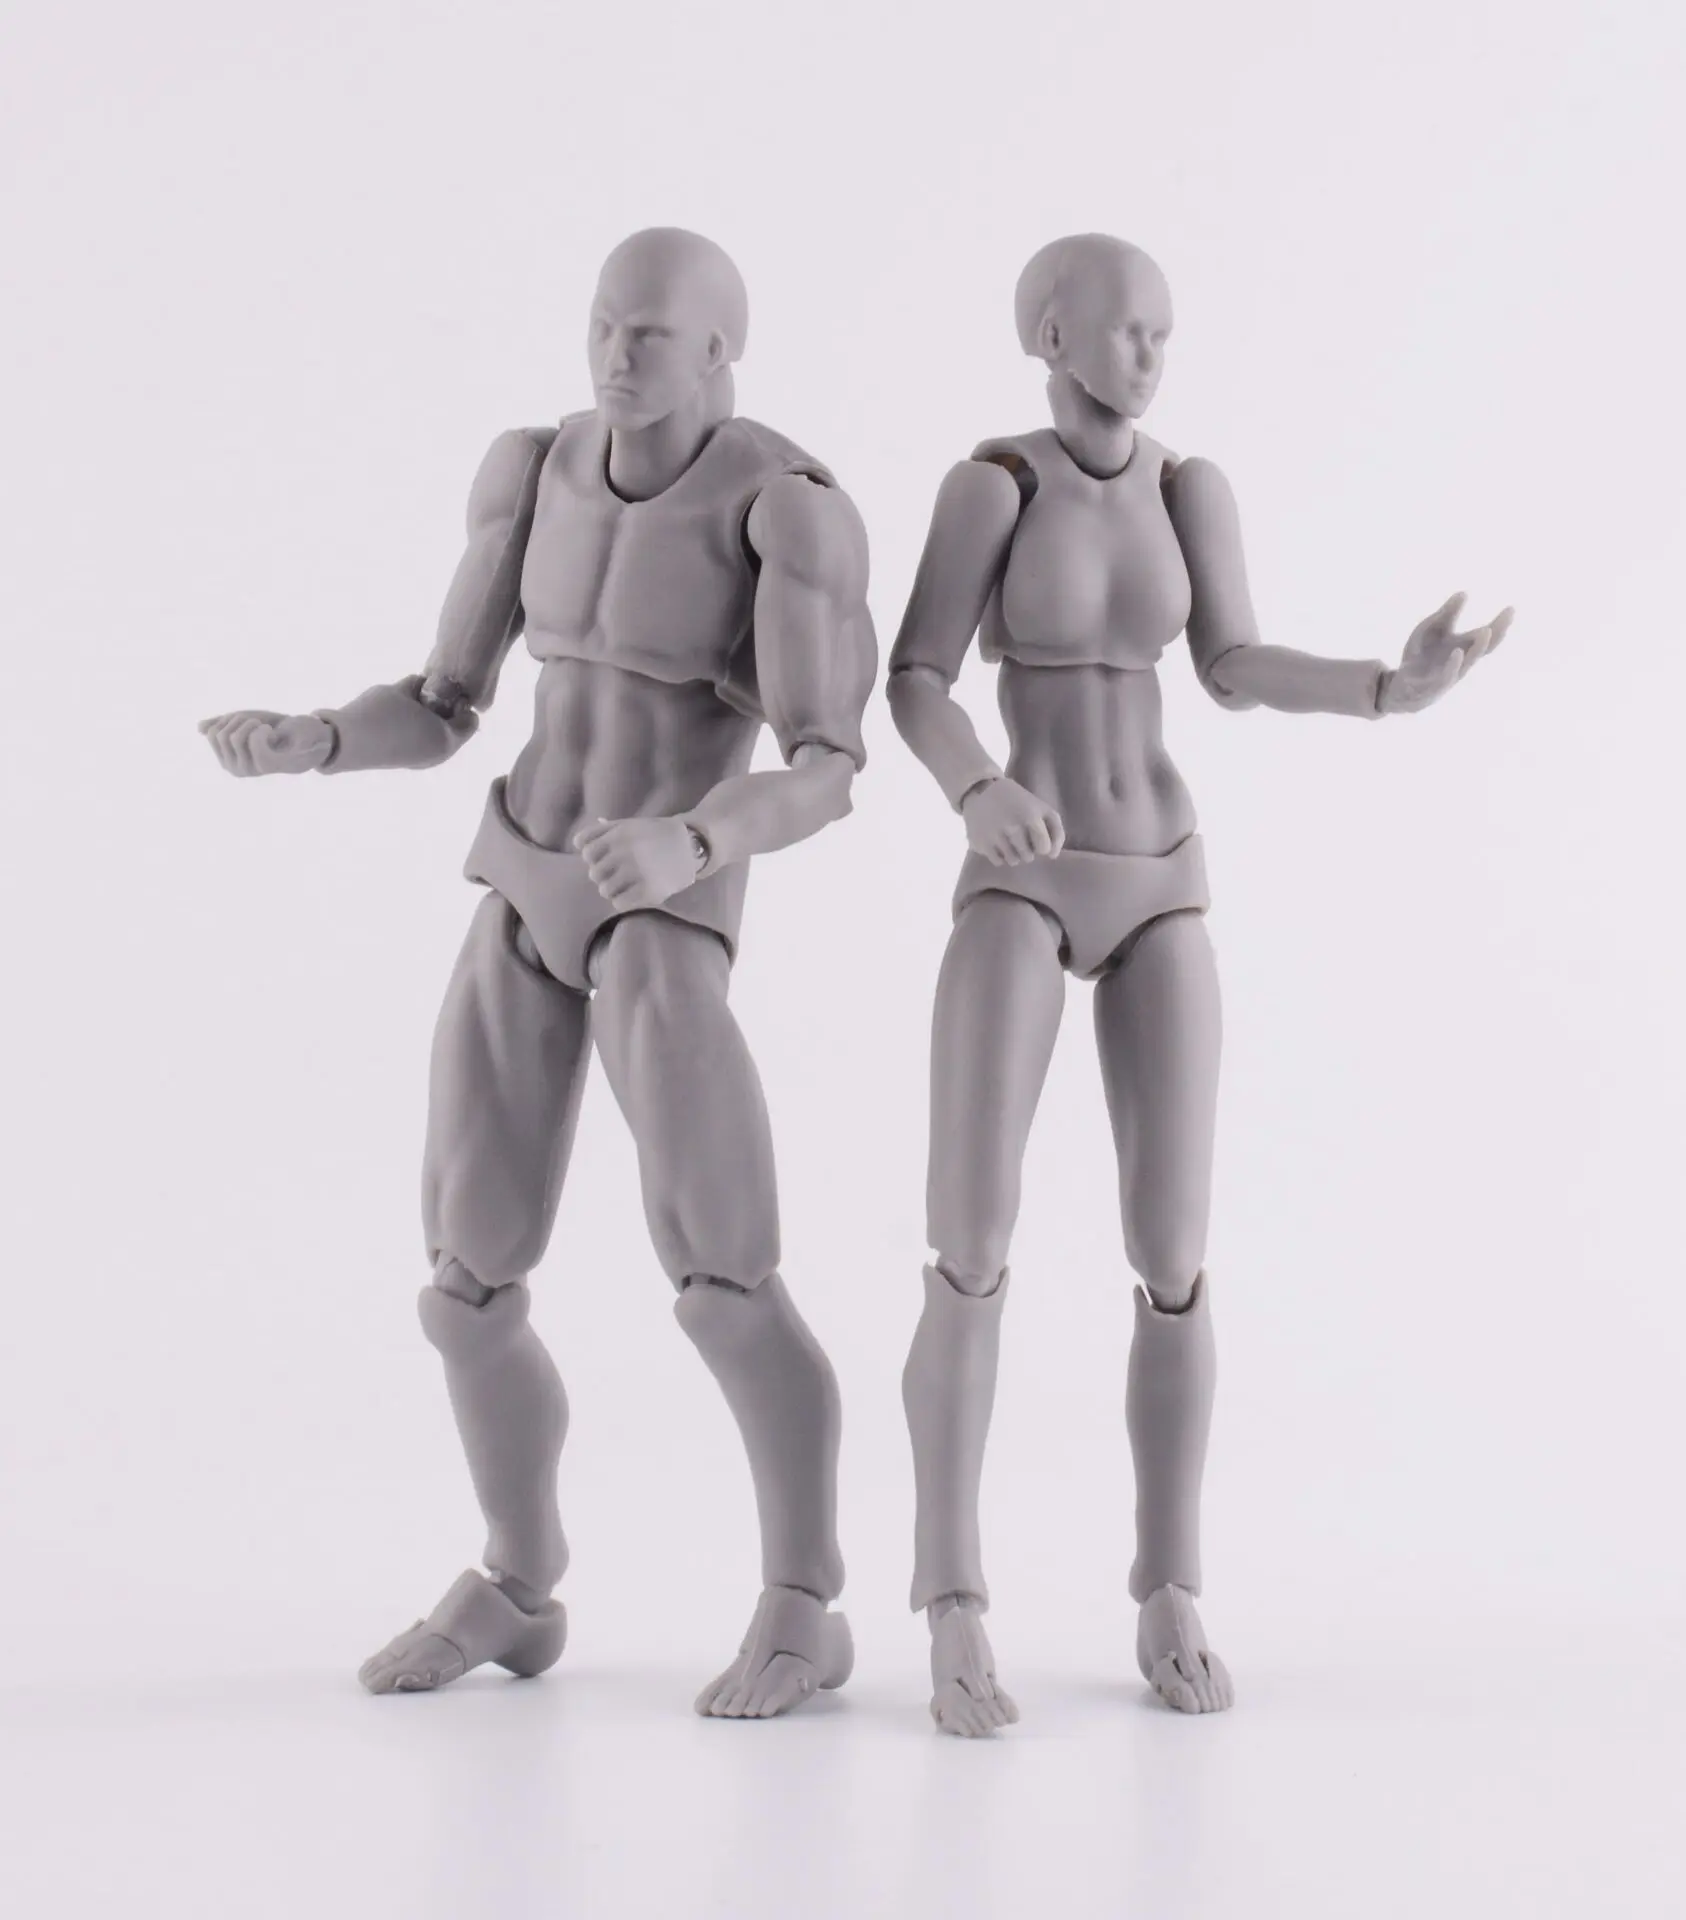 Figma Deluxe Edition тело Кун тело Чан BJD Суставы подвижные фигурки модель игрушки